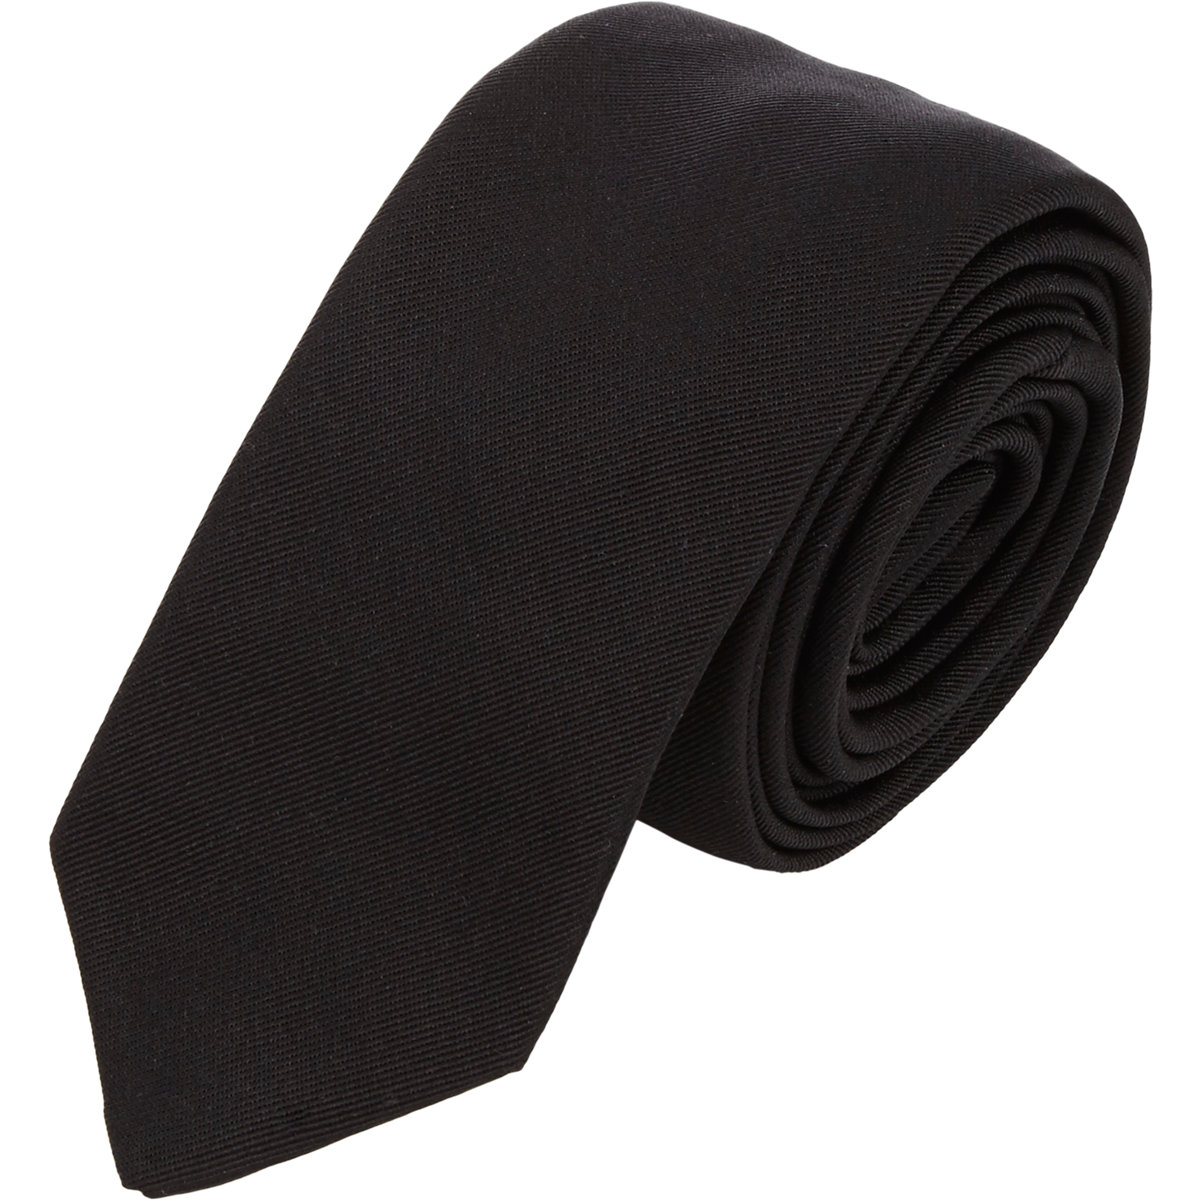 Lyst - Lanvin Twill Neck Tie in Black for Men